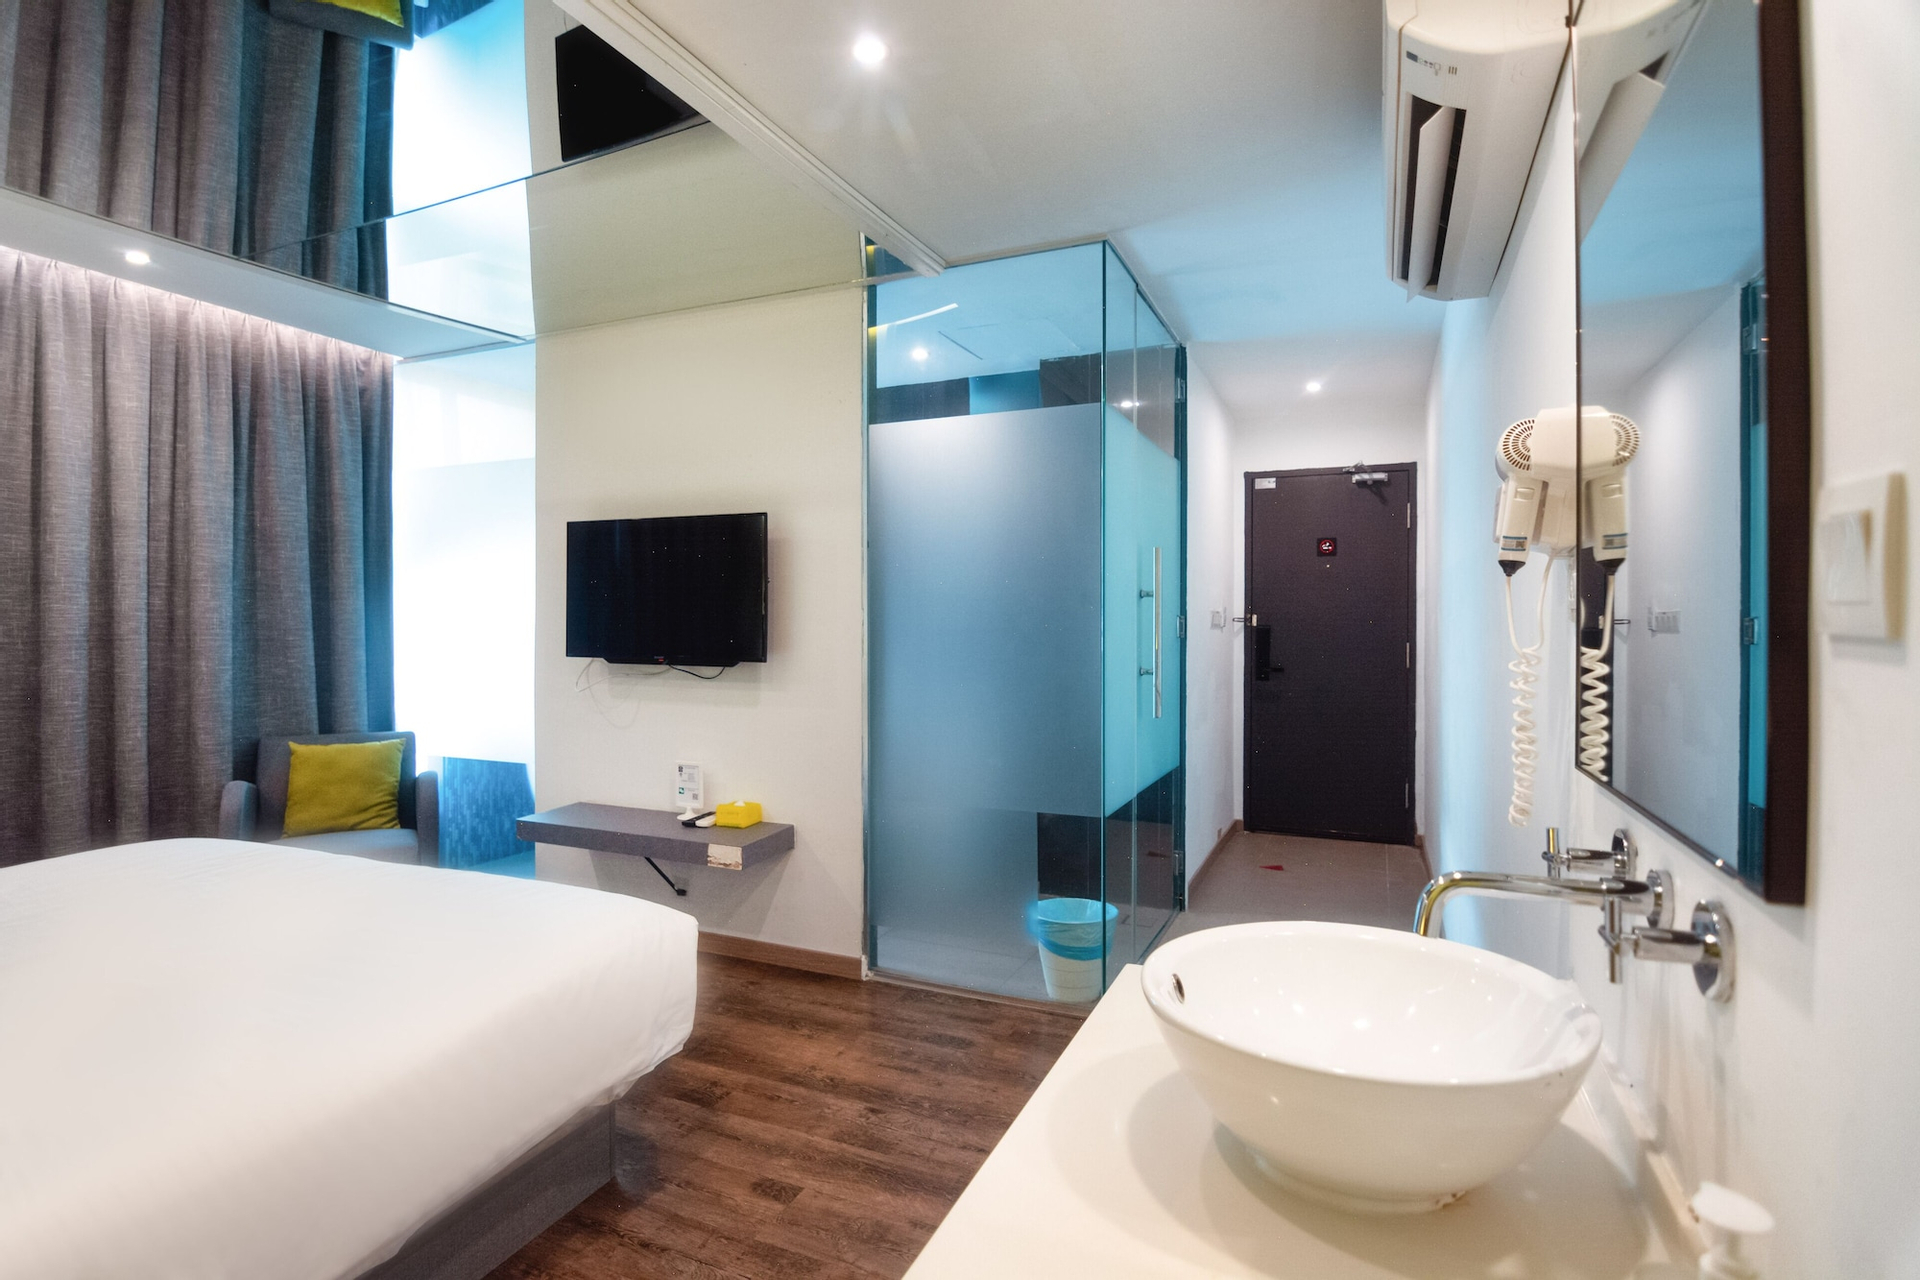 Bedroom 3, Apple Hotel Times Square, Pulau Penang